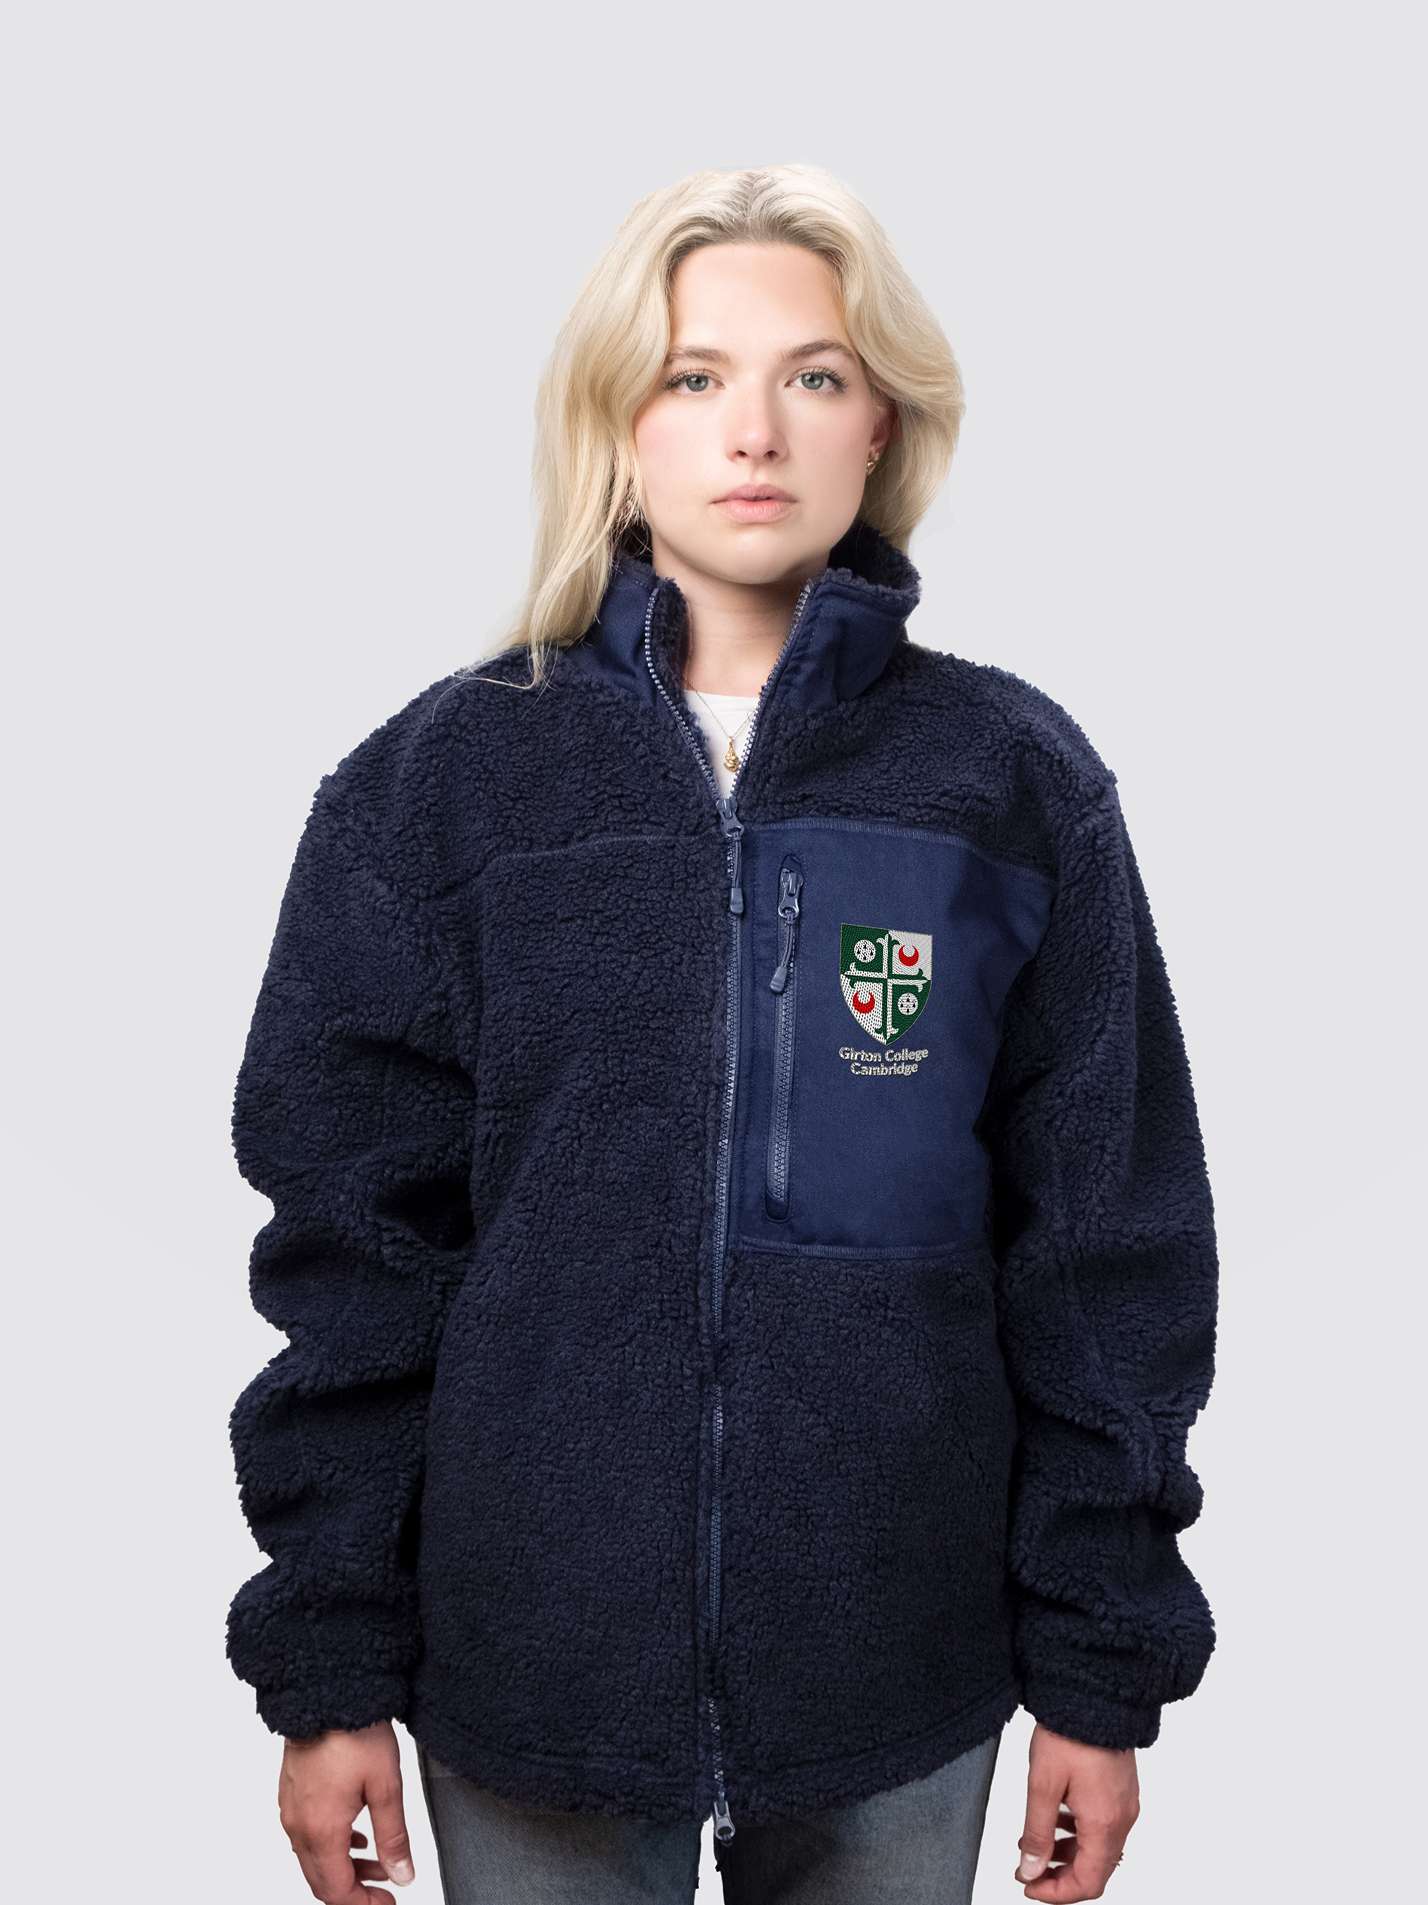 Girton College Cambridge Unisex Fluffy Sherpa Fleece Jacket